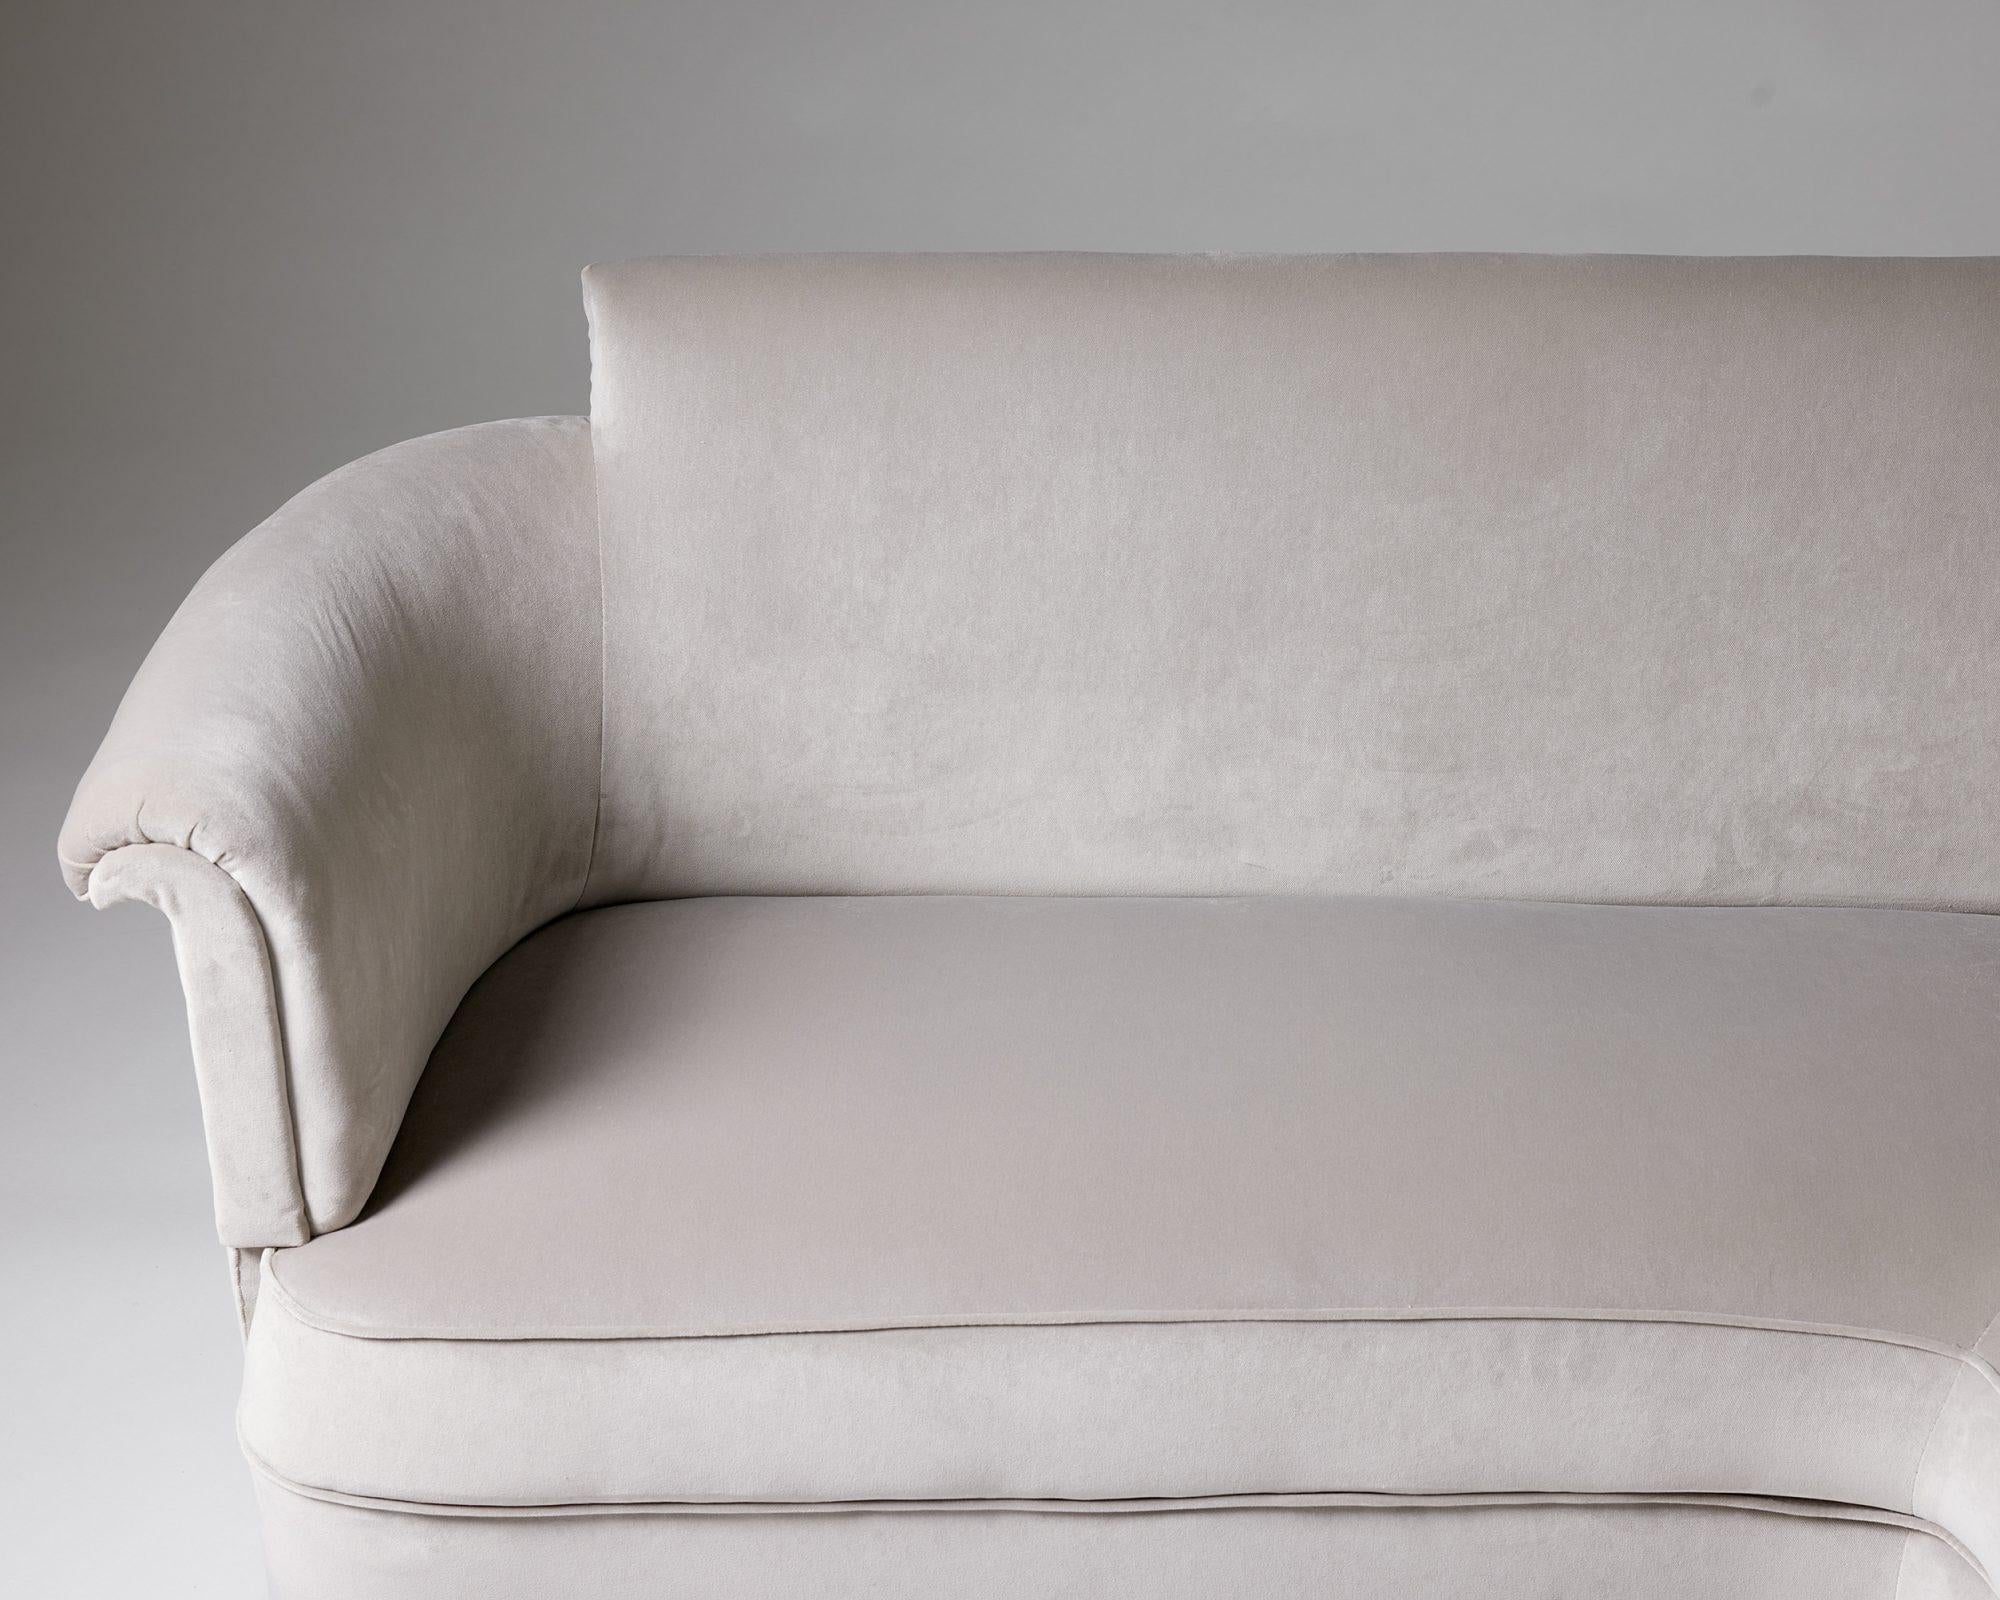 Mid-Century Modern Sofa Designed by Axel Einar Hjorth for Nordiska Kompaniet, Sweden, 1930s For Sale